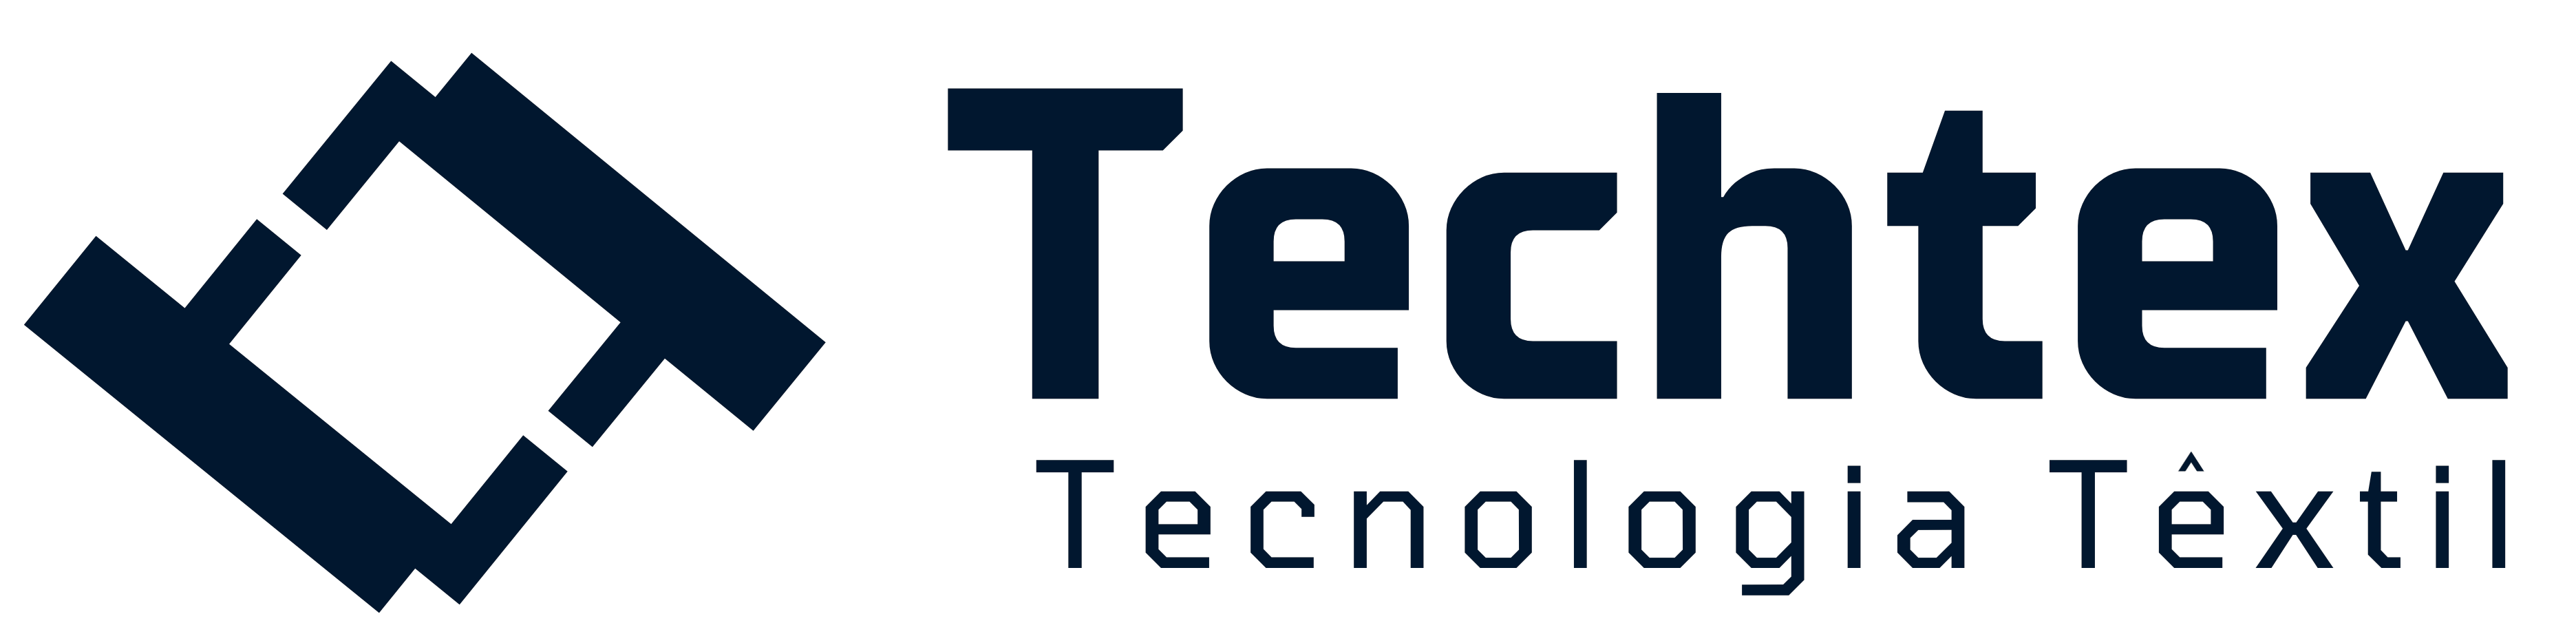 Techtex - Tecnologia Têxtil